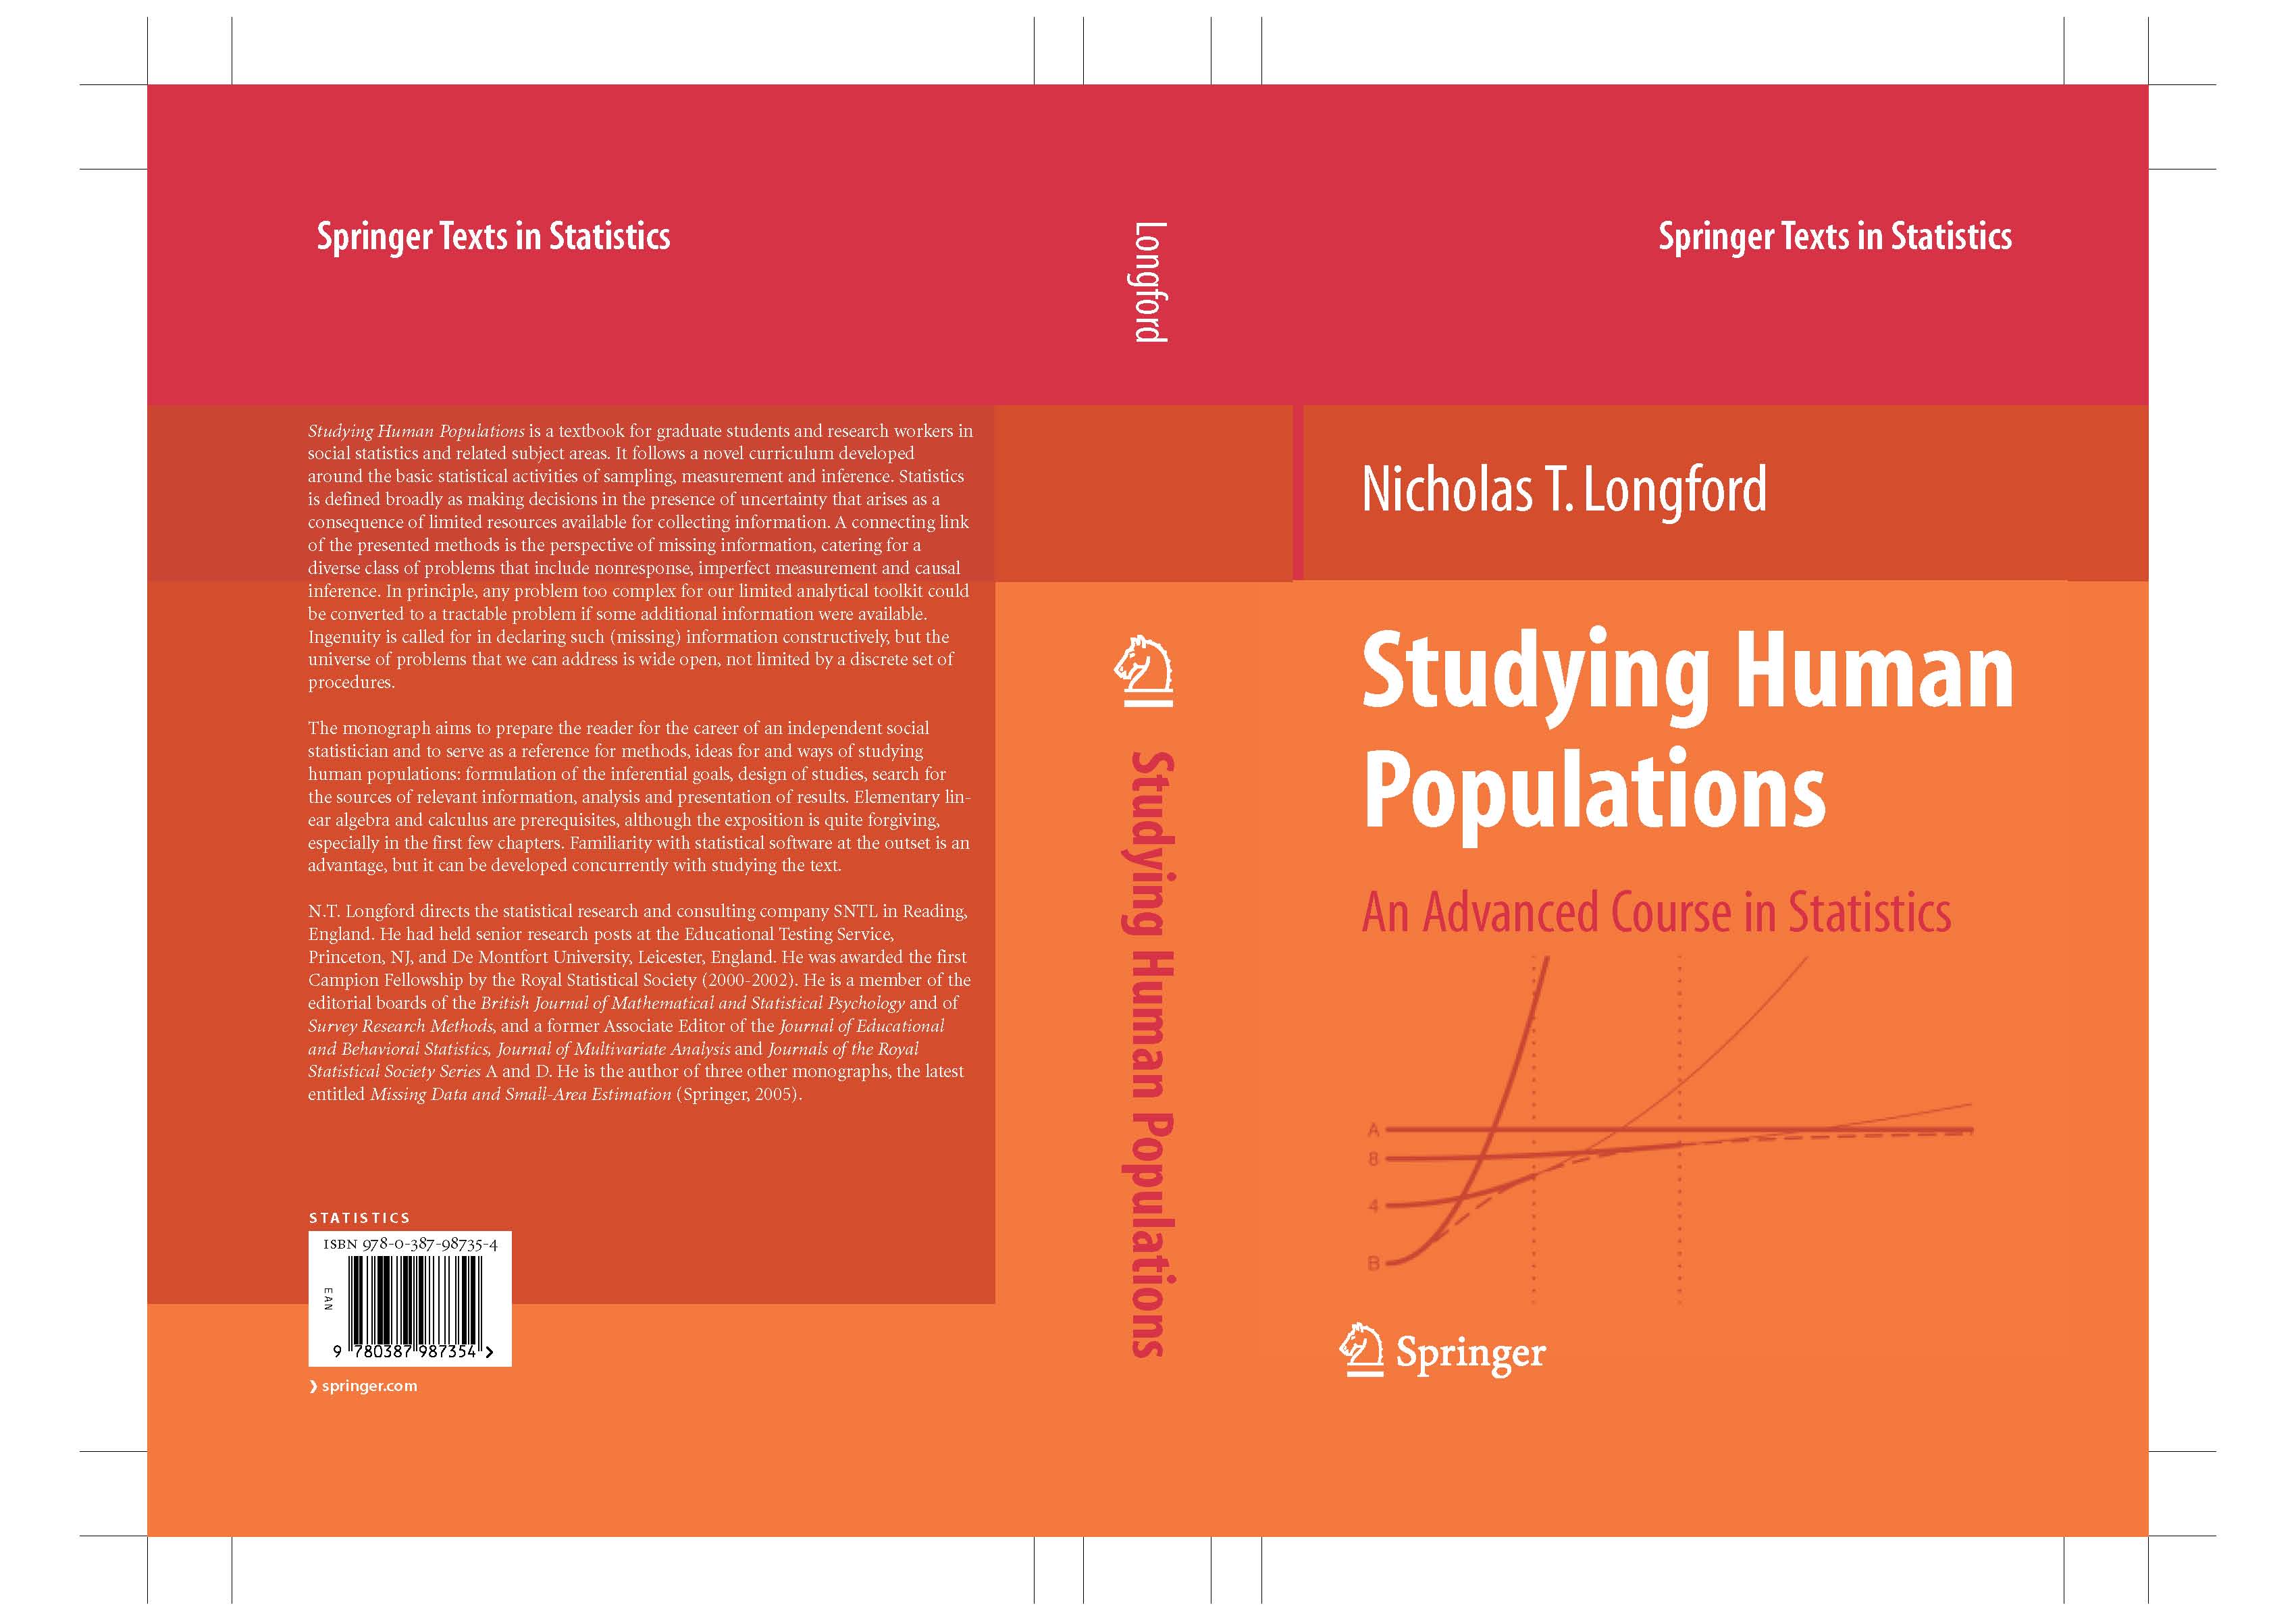 Studying Human Populations